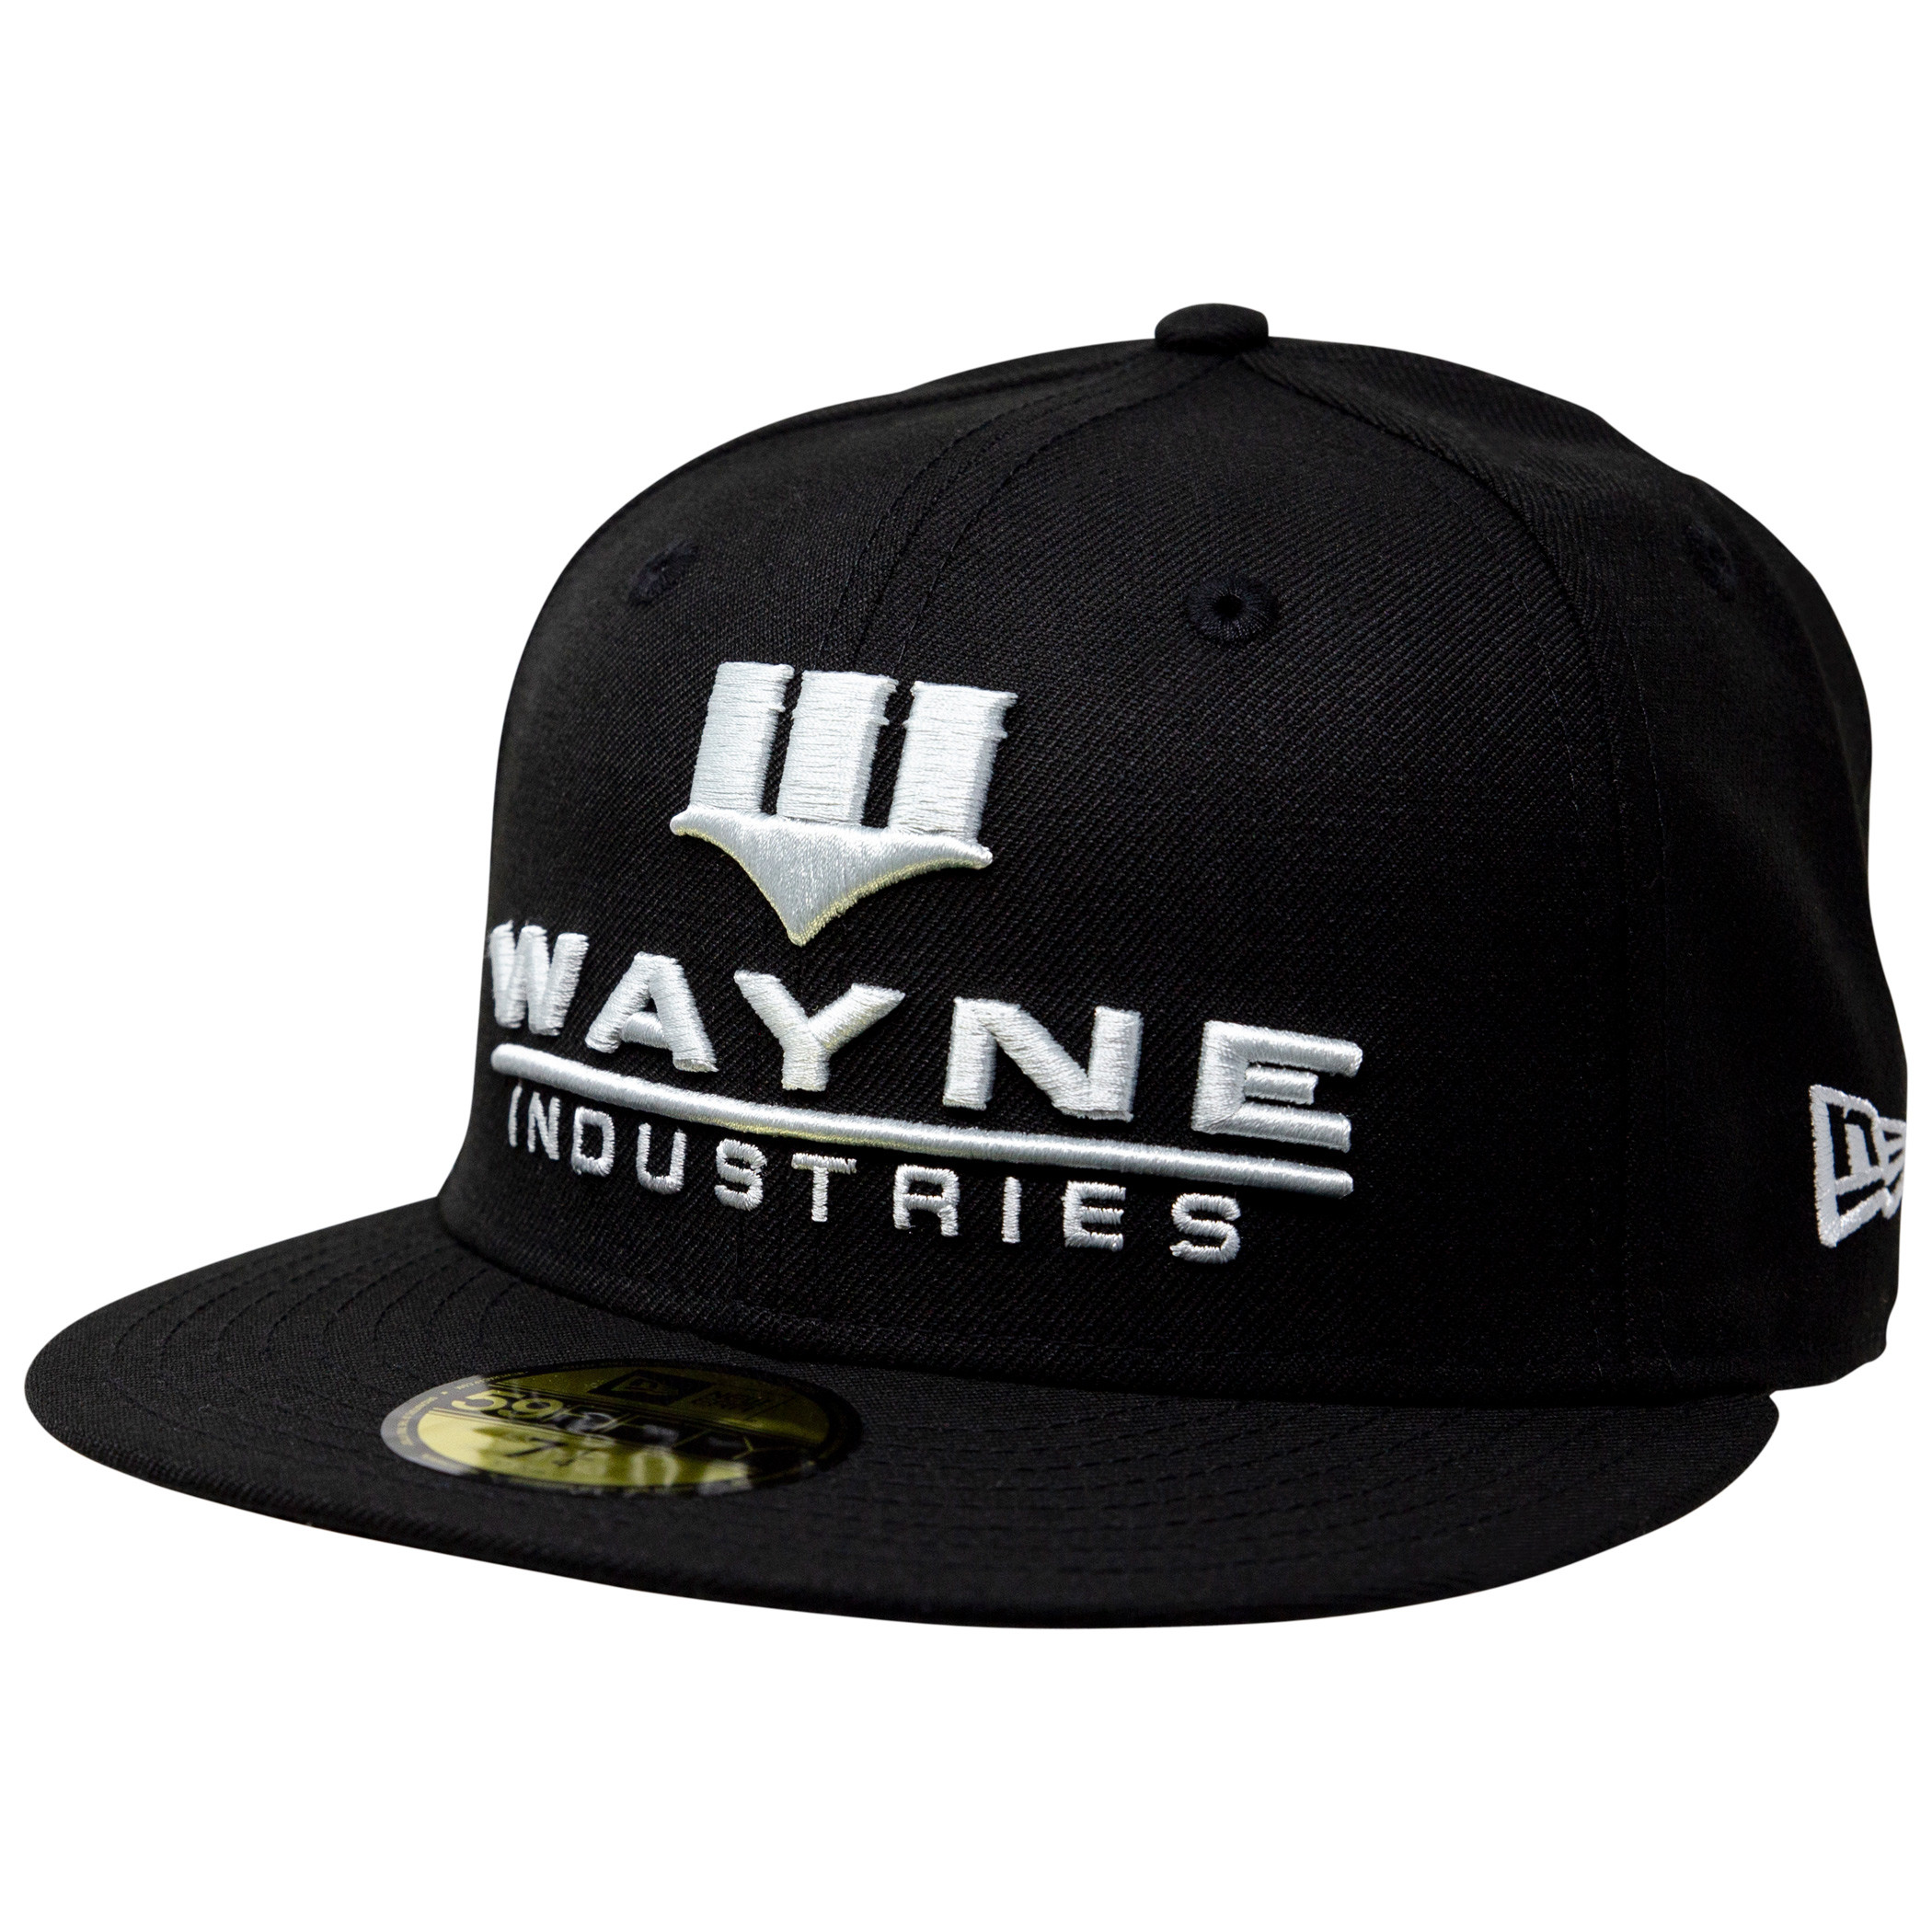 Batman Wayne Industries New Era 59Fifty Fitted Hat